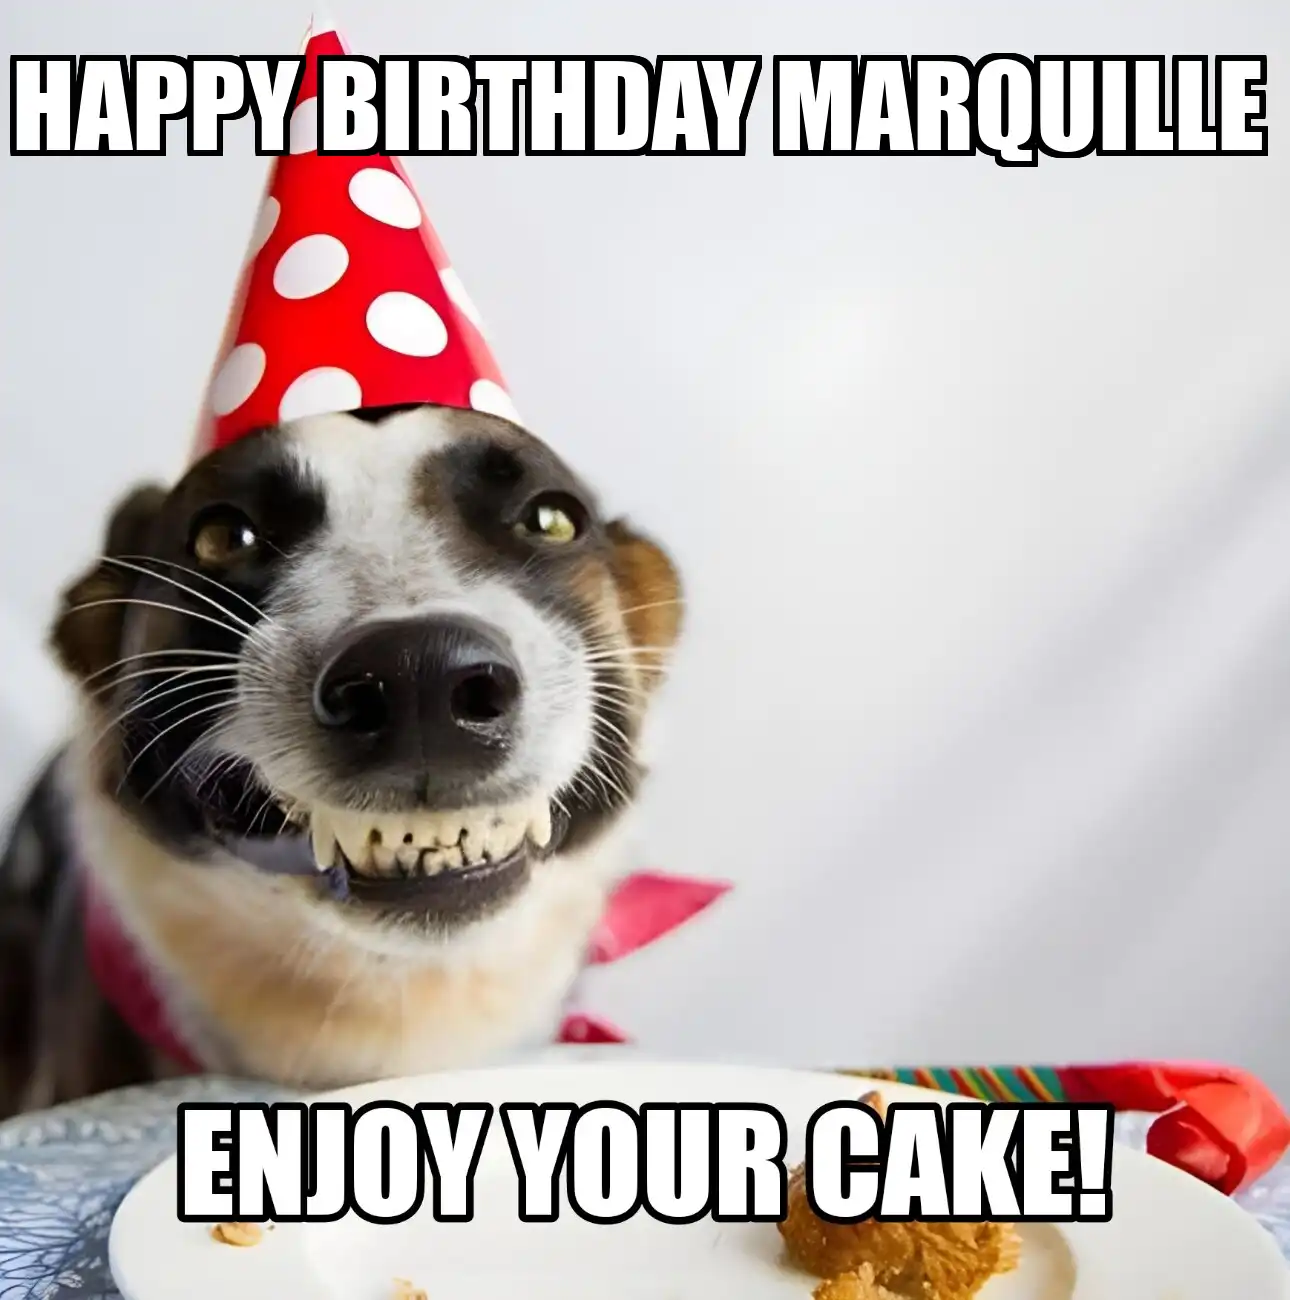 Happy Birthday Marquille Enjoy Your Cake Dog Meme